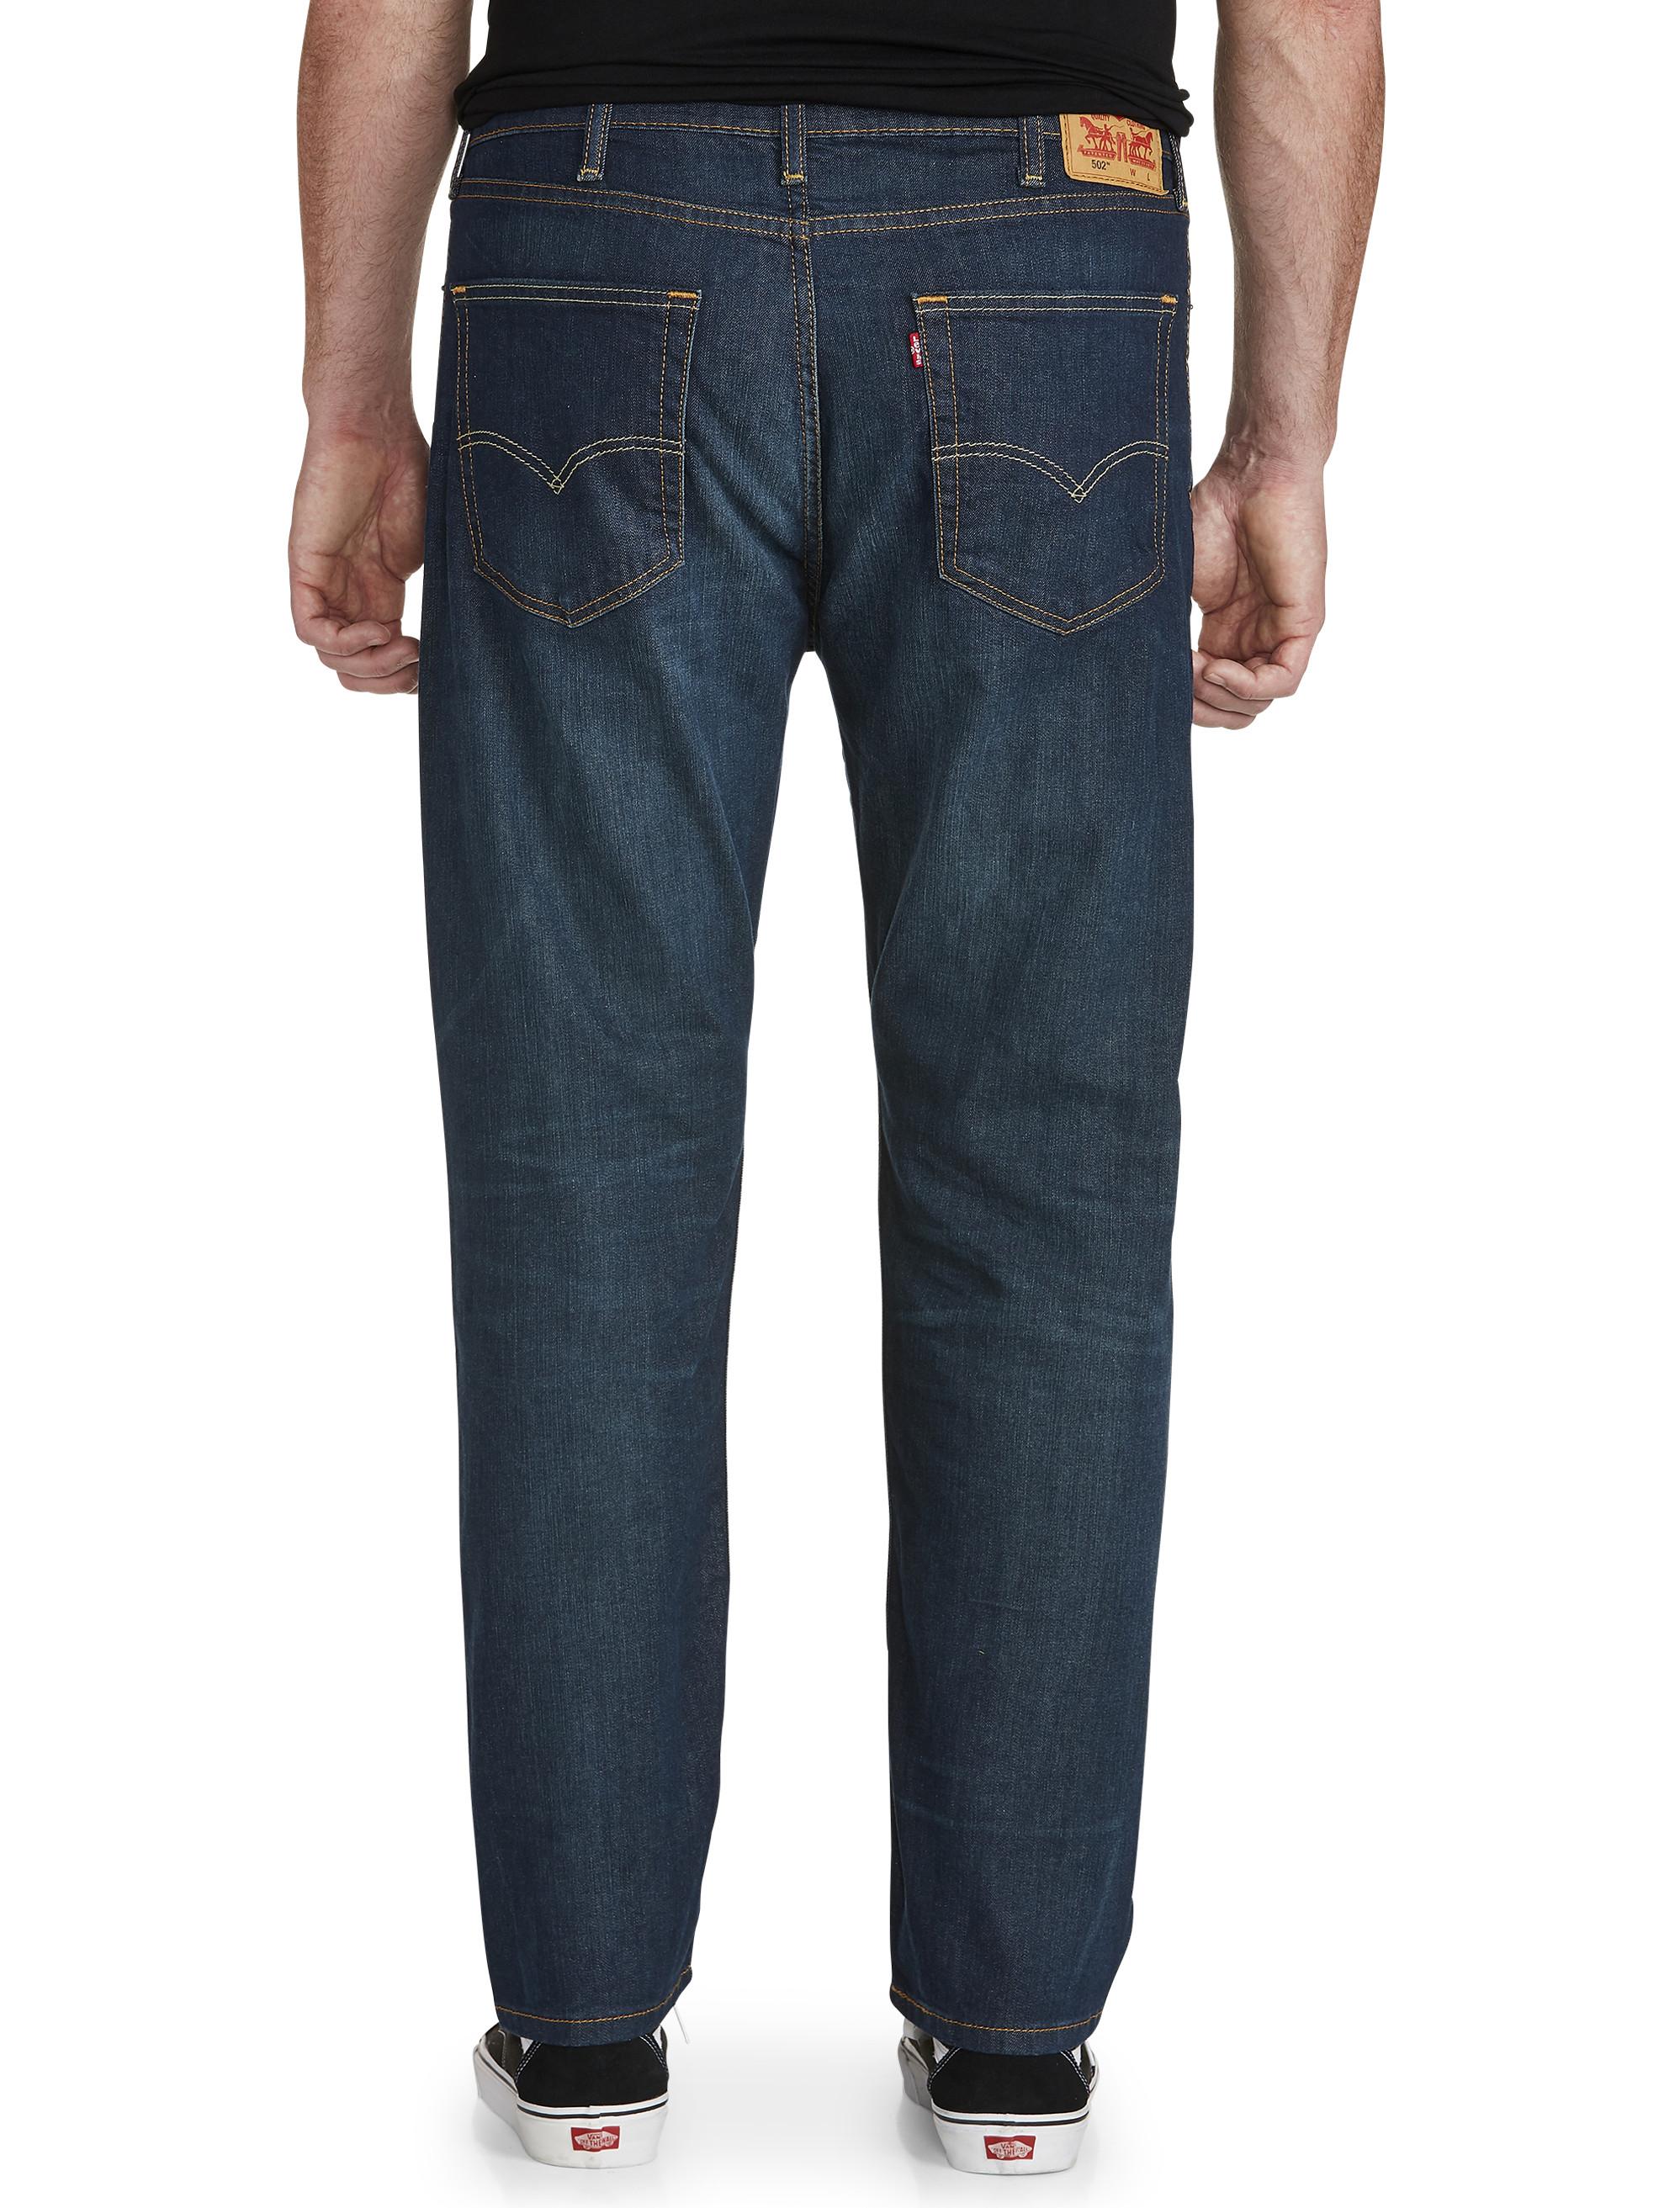 Levi's Denim Big & Tall 502 Taper-fit Stretch Jeans in Blue for Men - Lyst